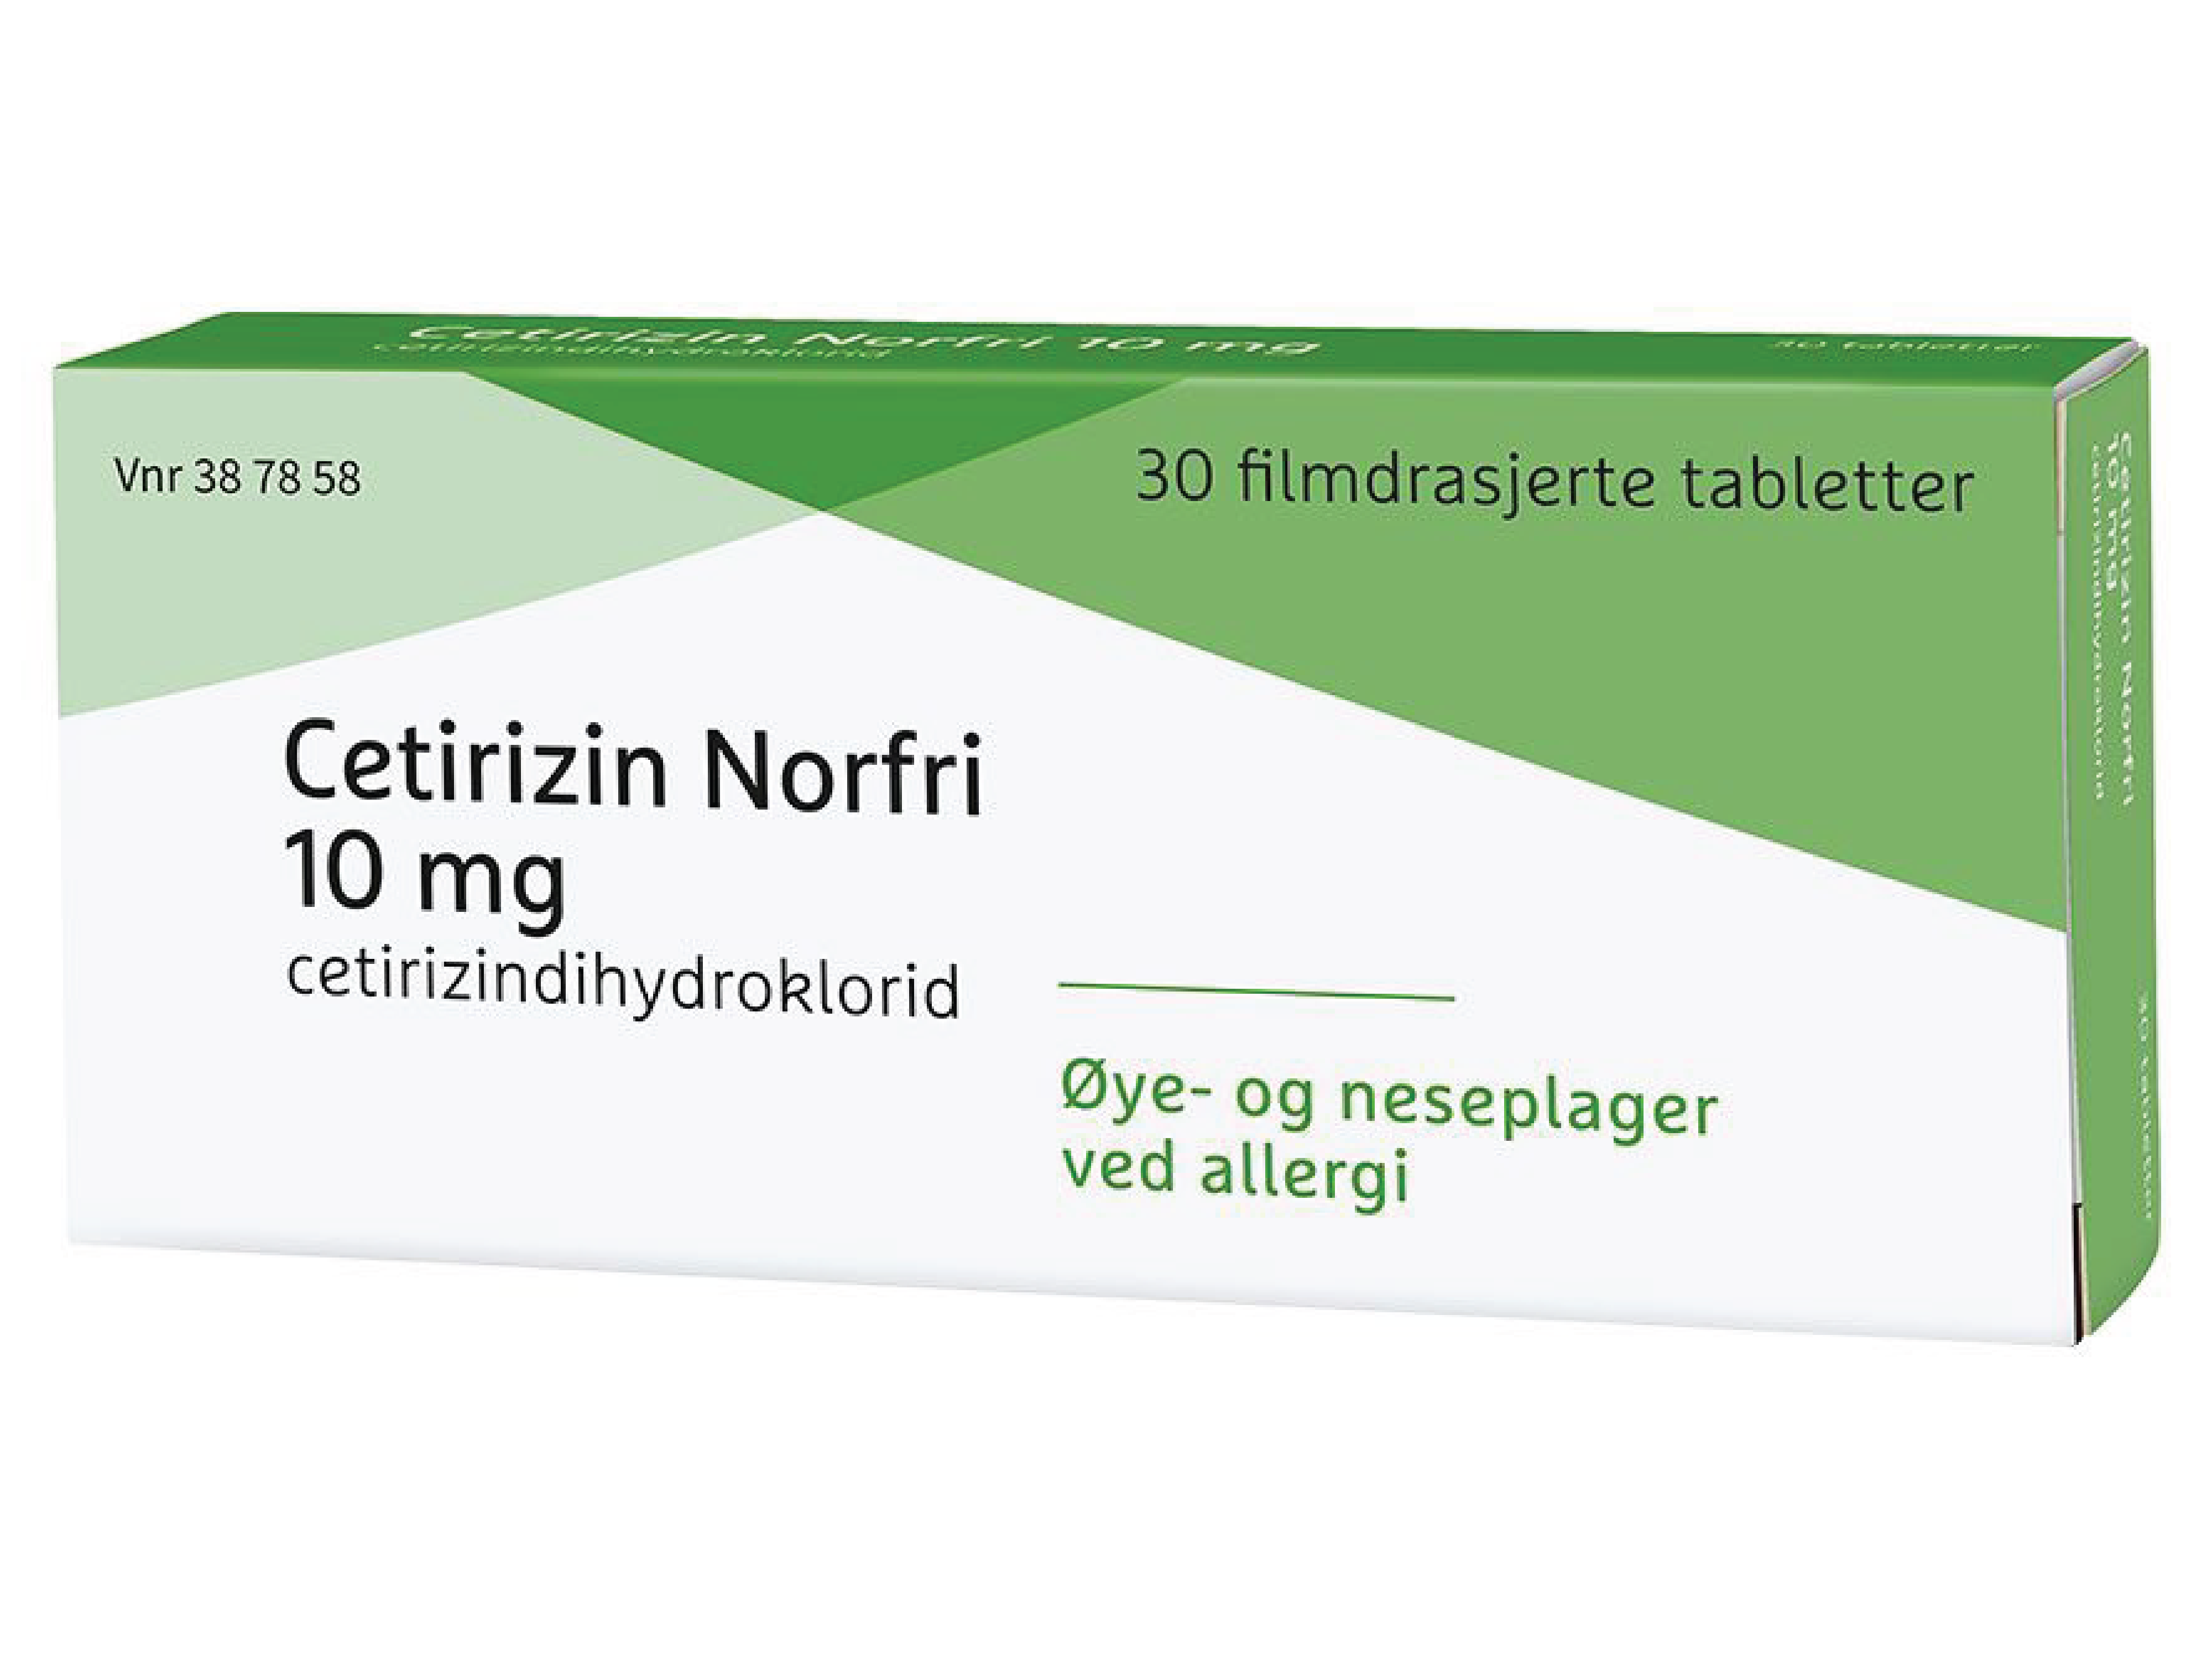 Cetirizin Norfri 10 mg tabletter, 30 stk.